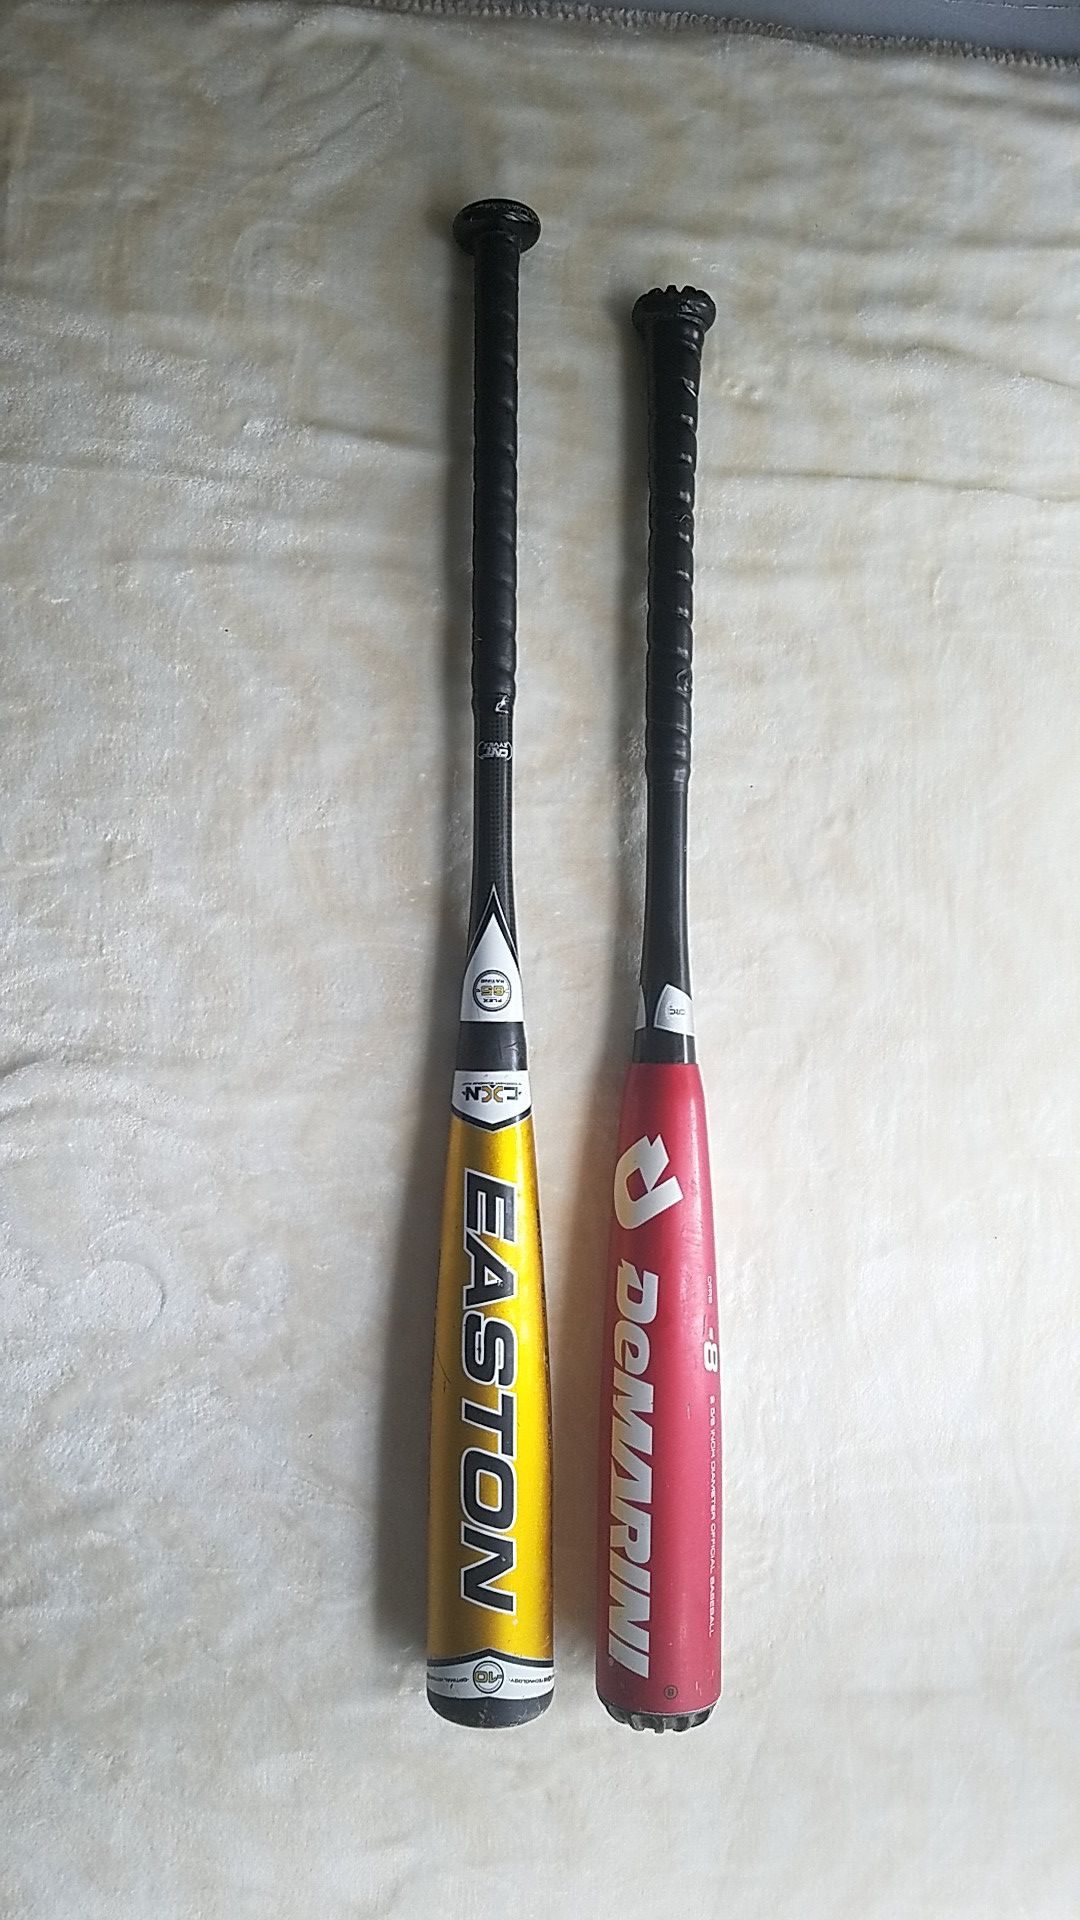 Demarini and Easton youth baseball bats